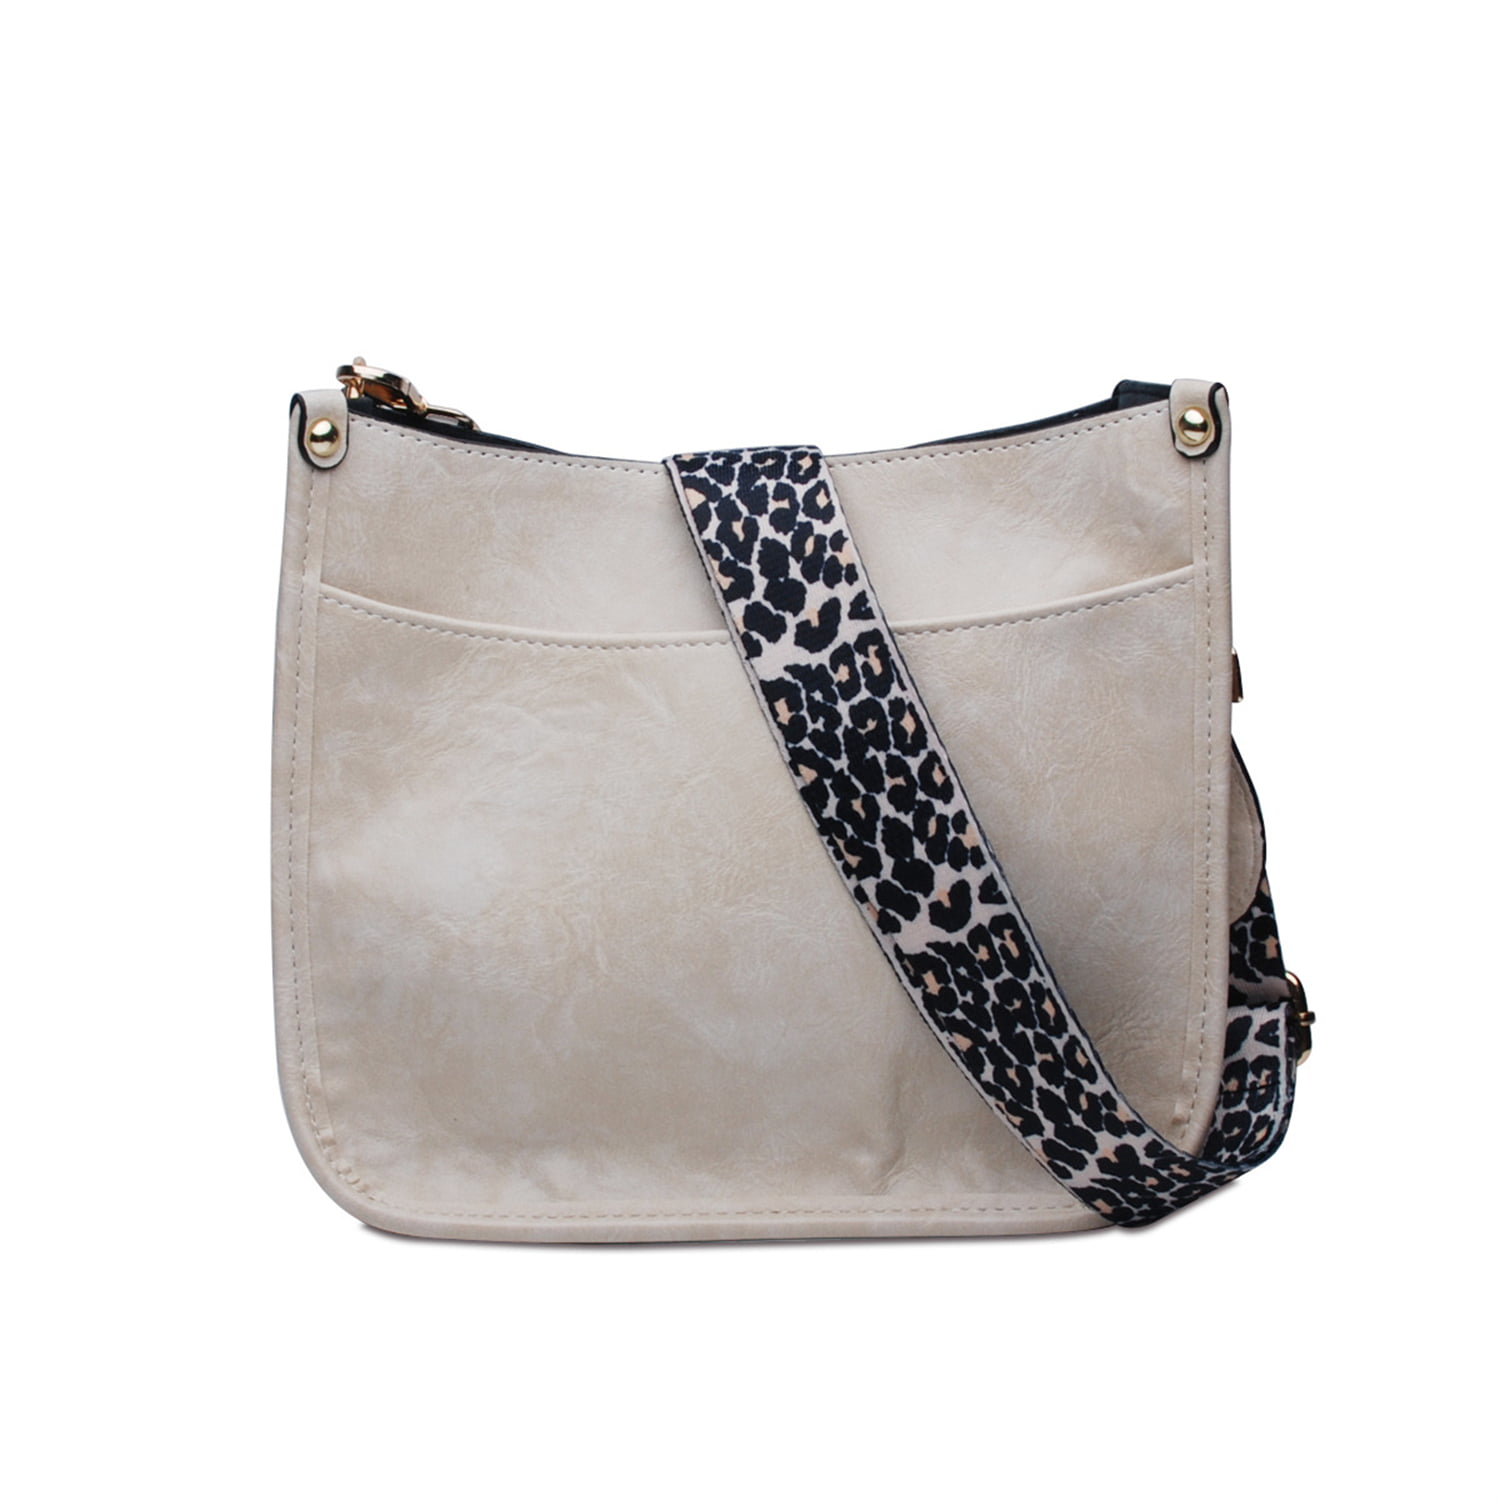 Sharif Handbags Hand-Painted Leather Crossbody Bag w/ Removable